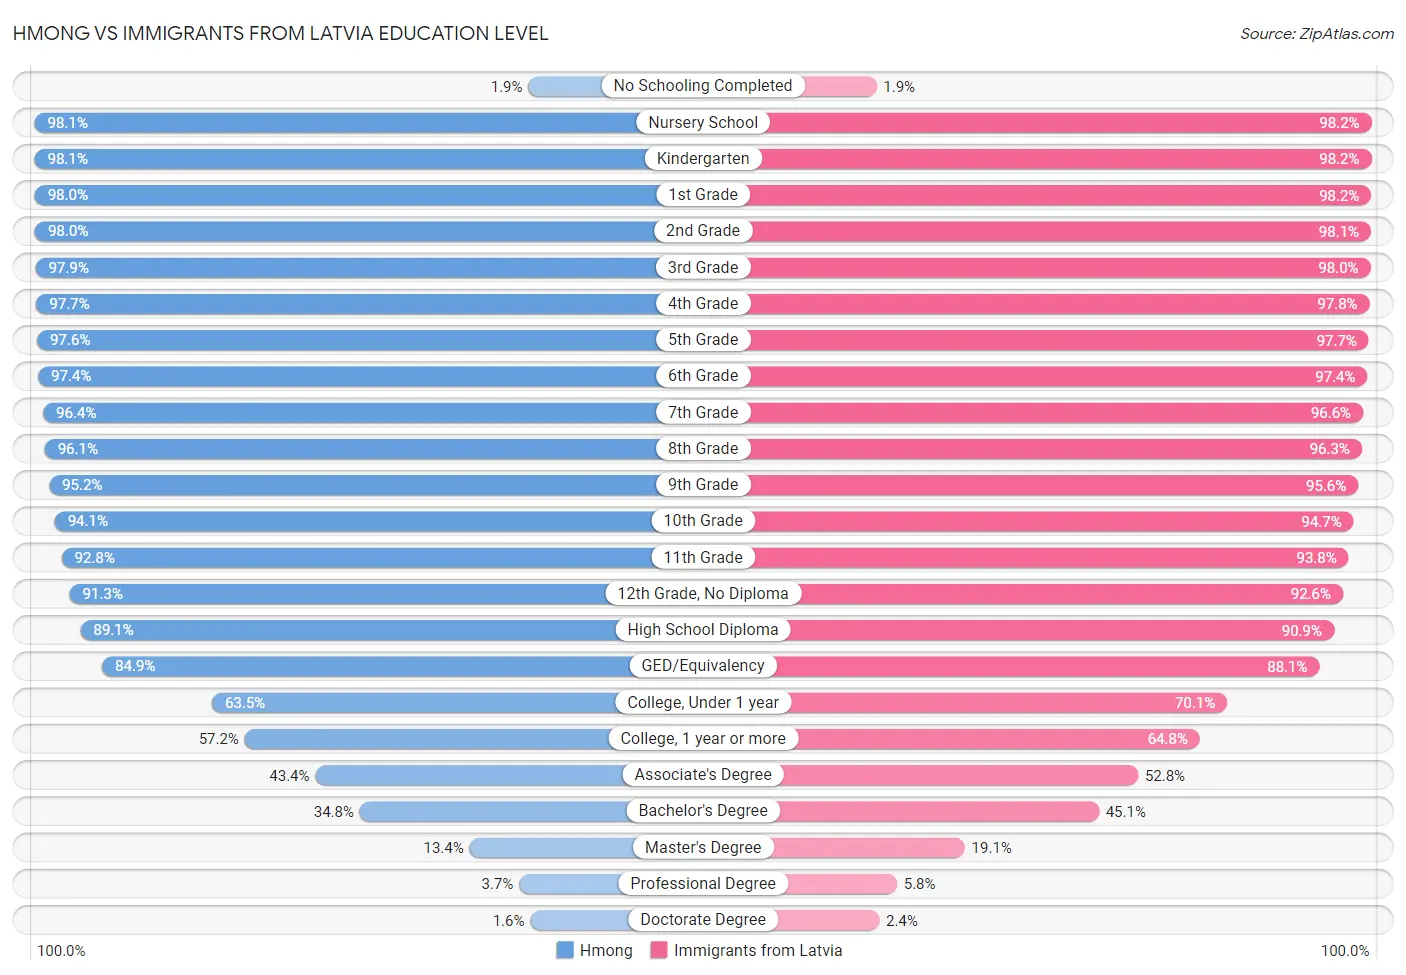 Hmong vs Immigrants from Latvia Education Level